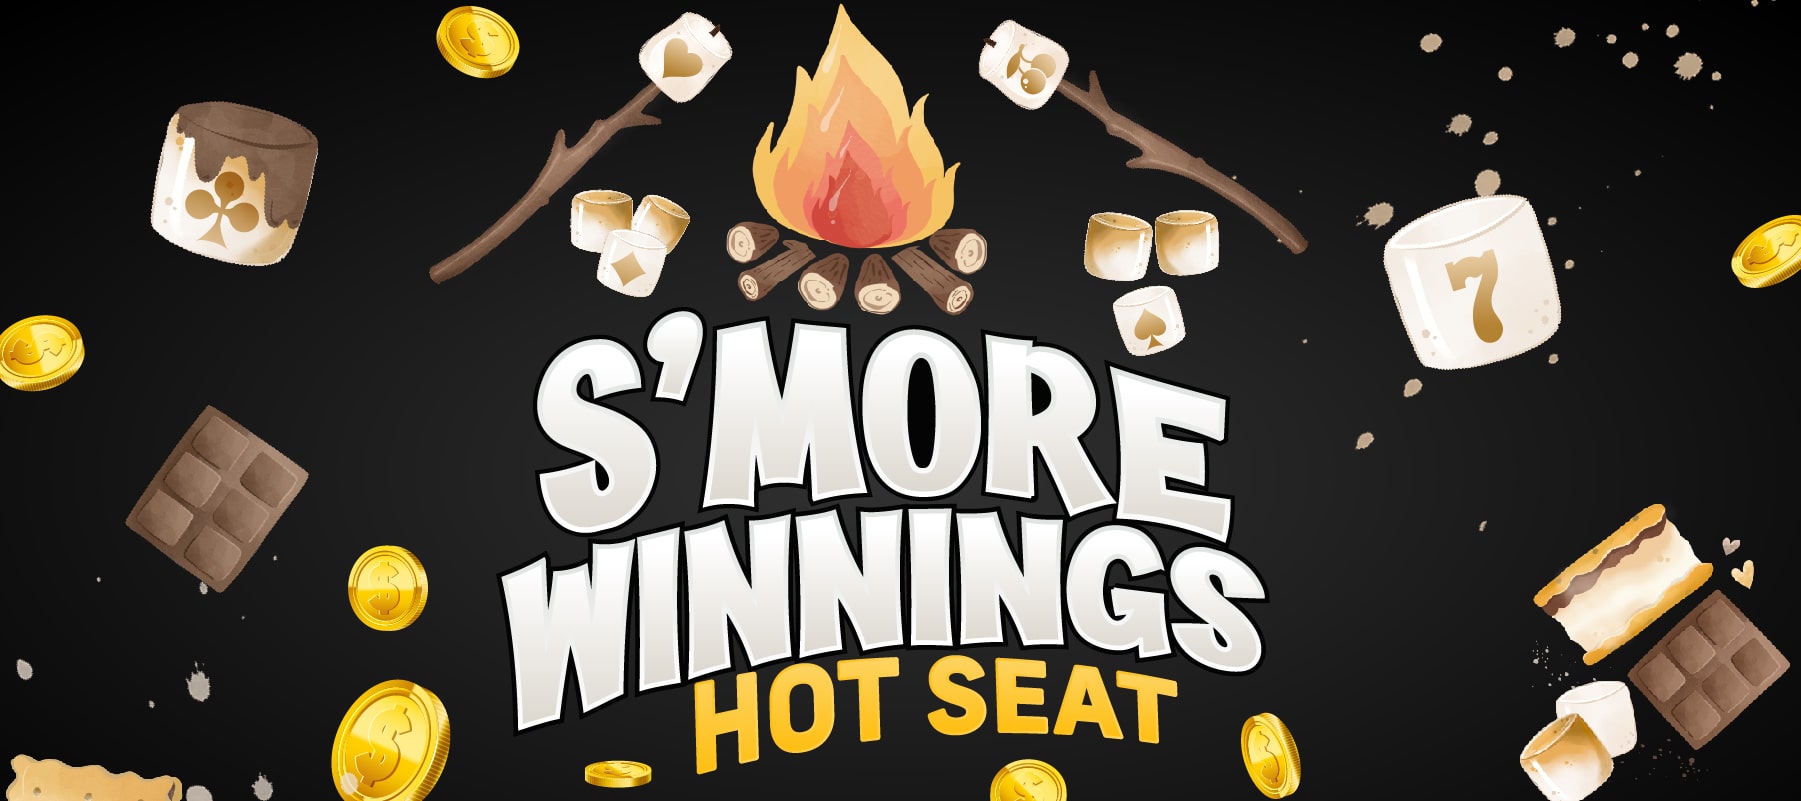 S’more Winnings Hot Seat